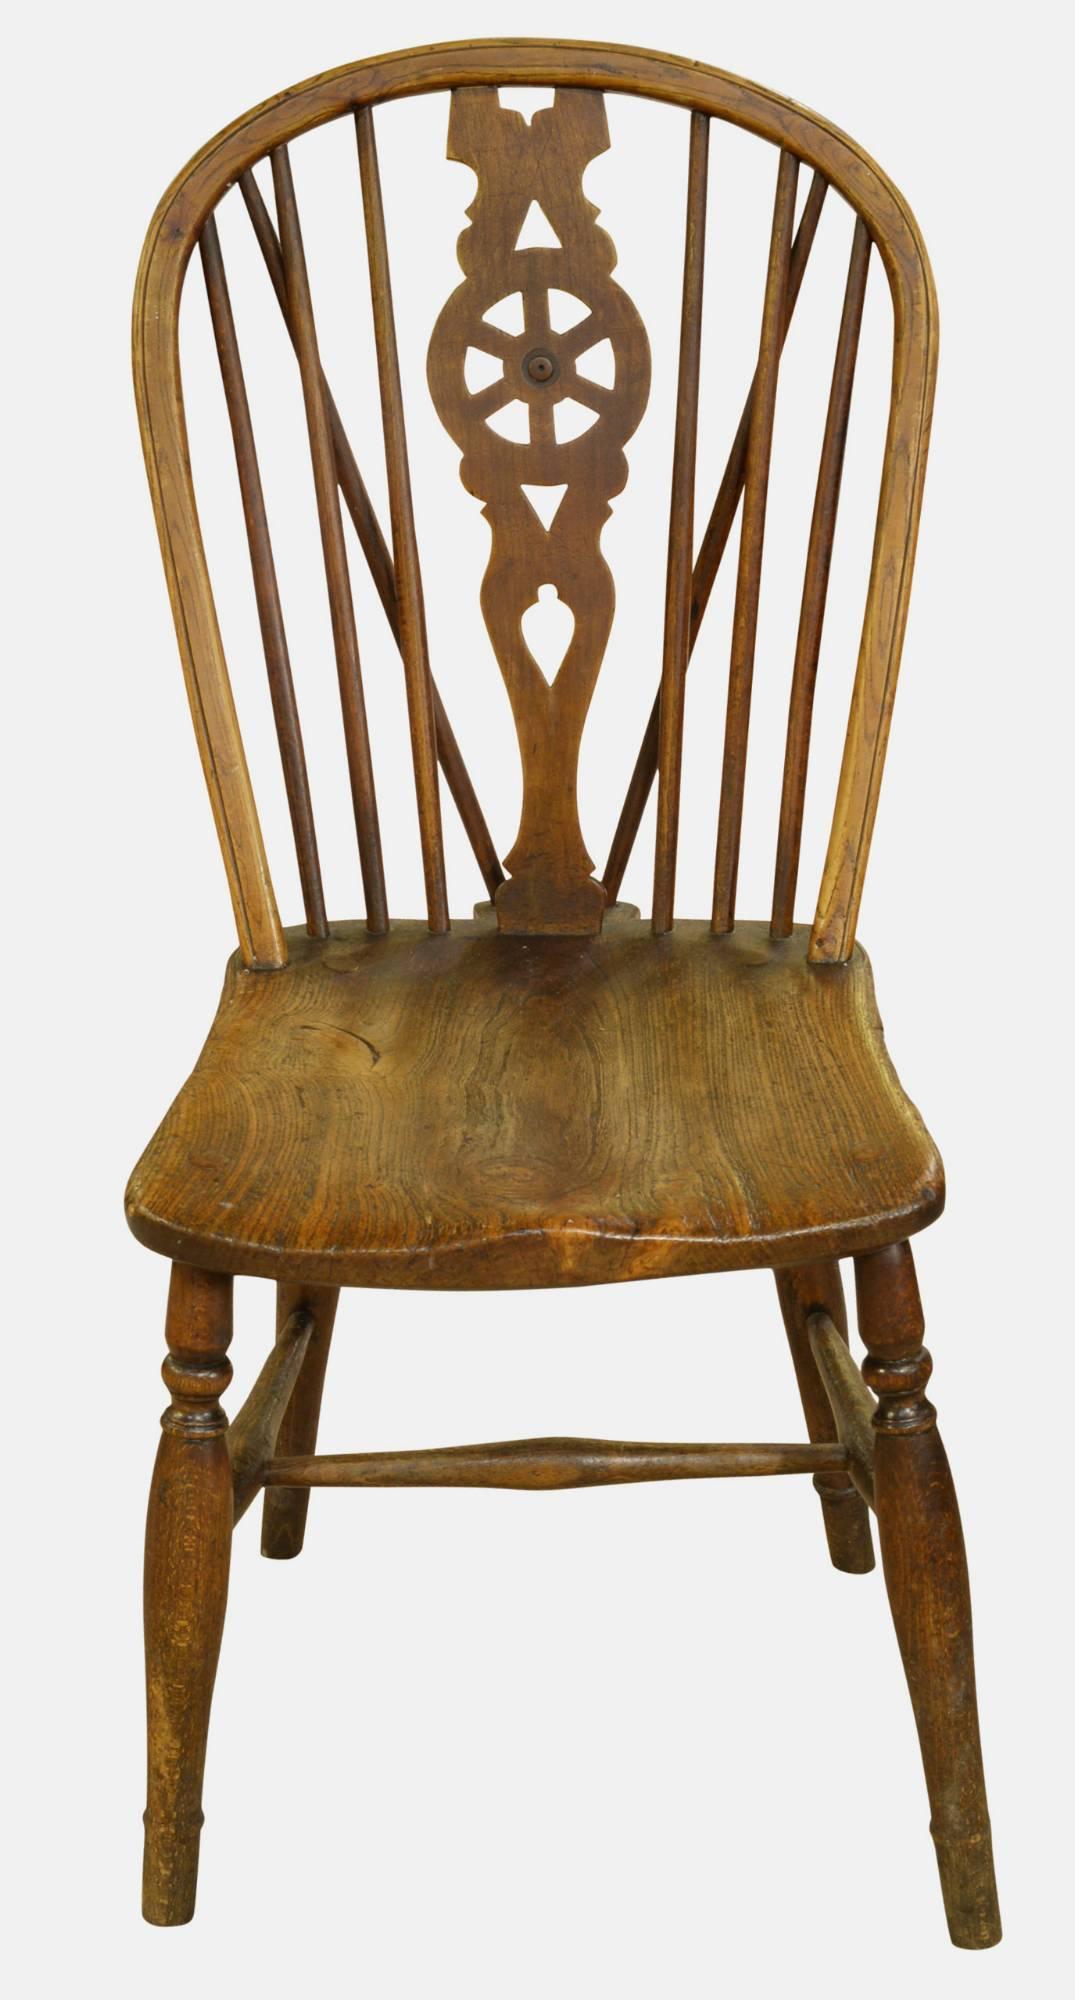 An antique elm and ash wheelback single chair,

circa 1820.